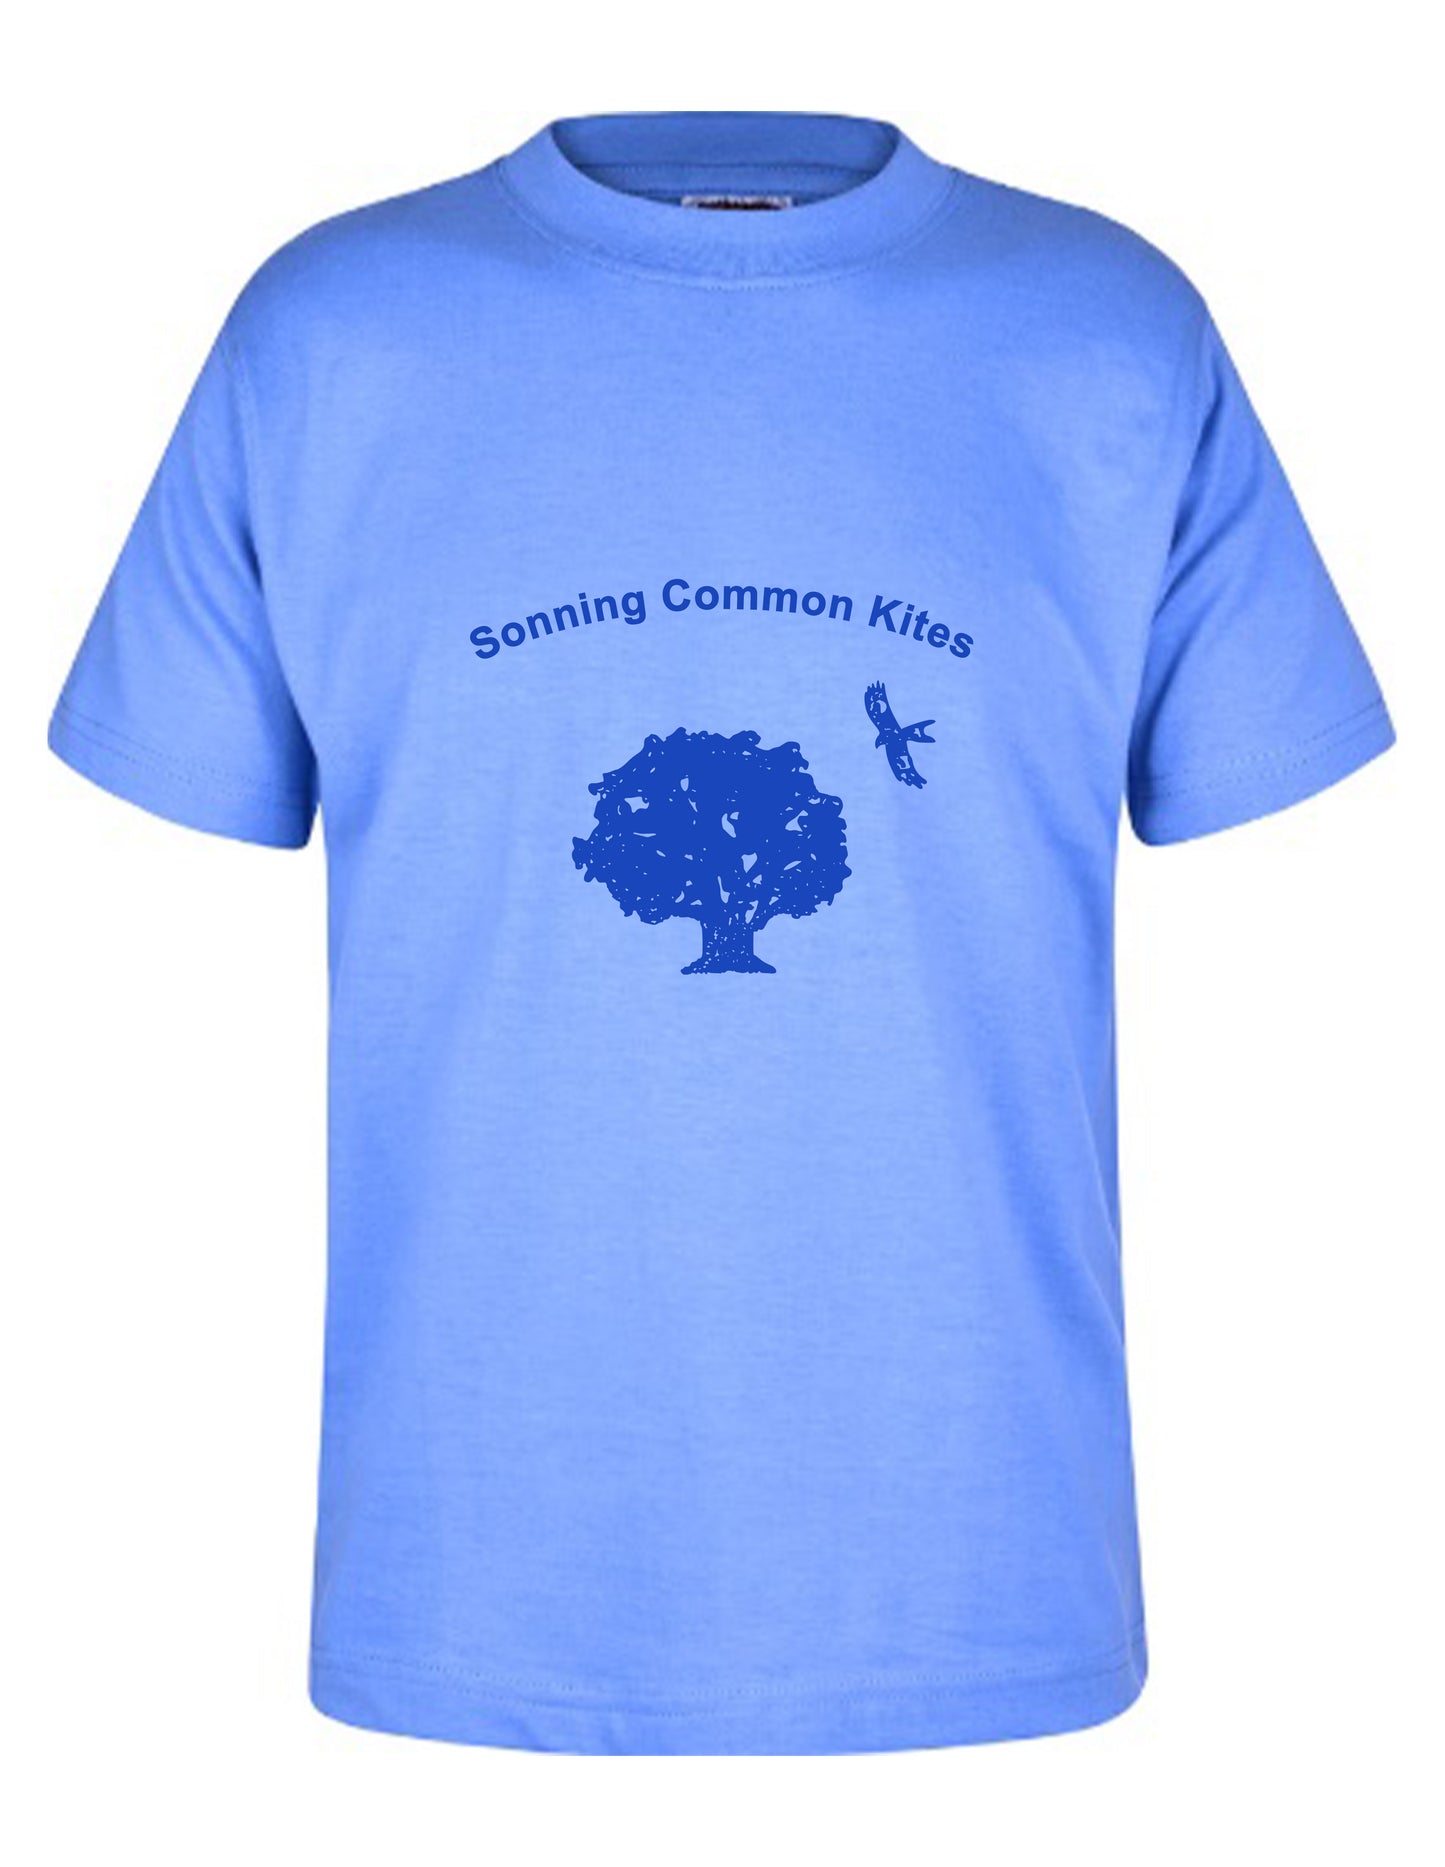 Sonning Common Kites - Unisex Cotton T-Shirt